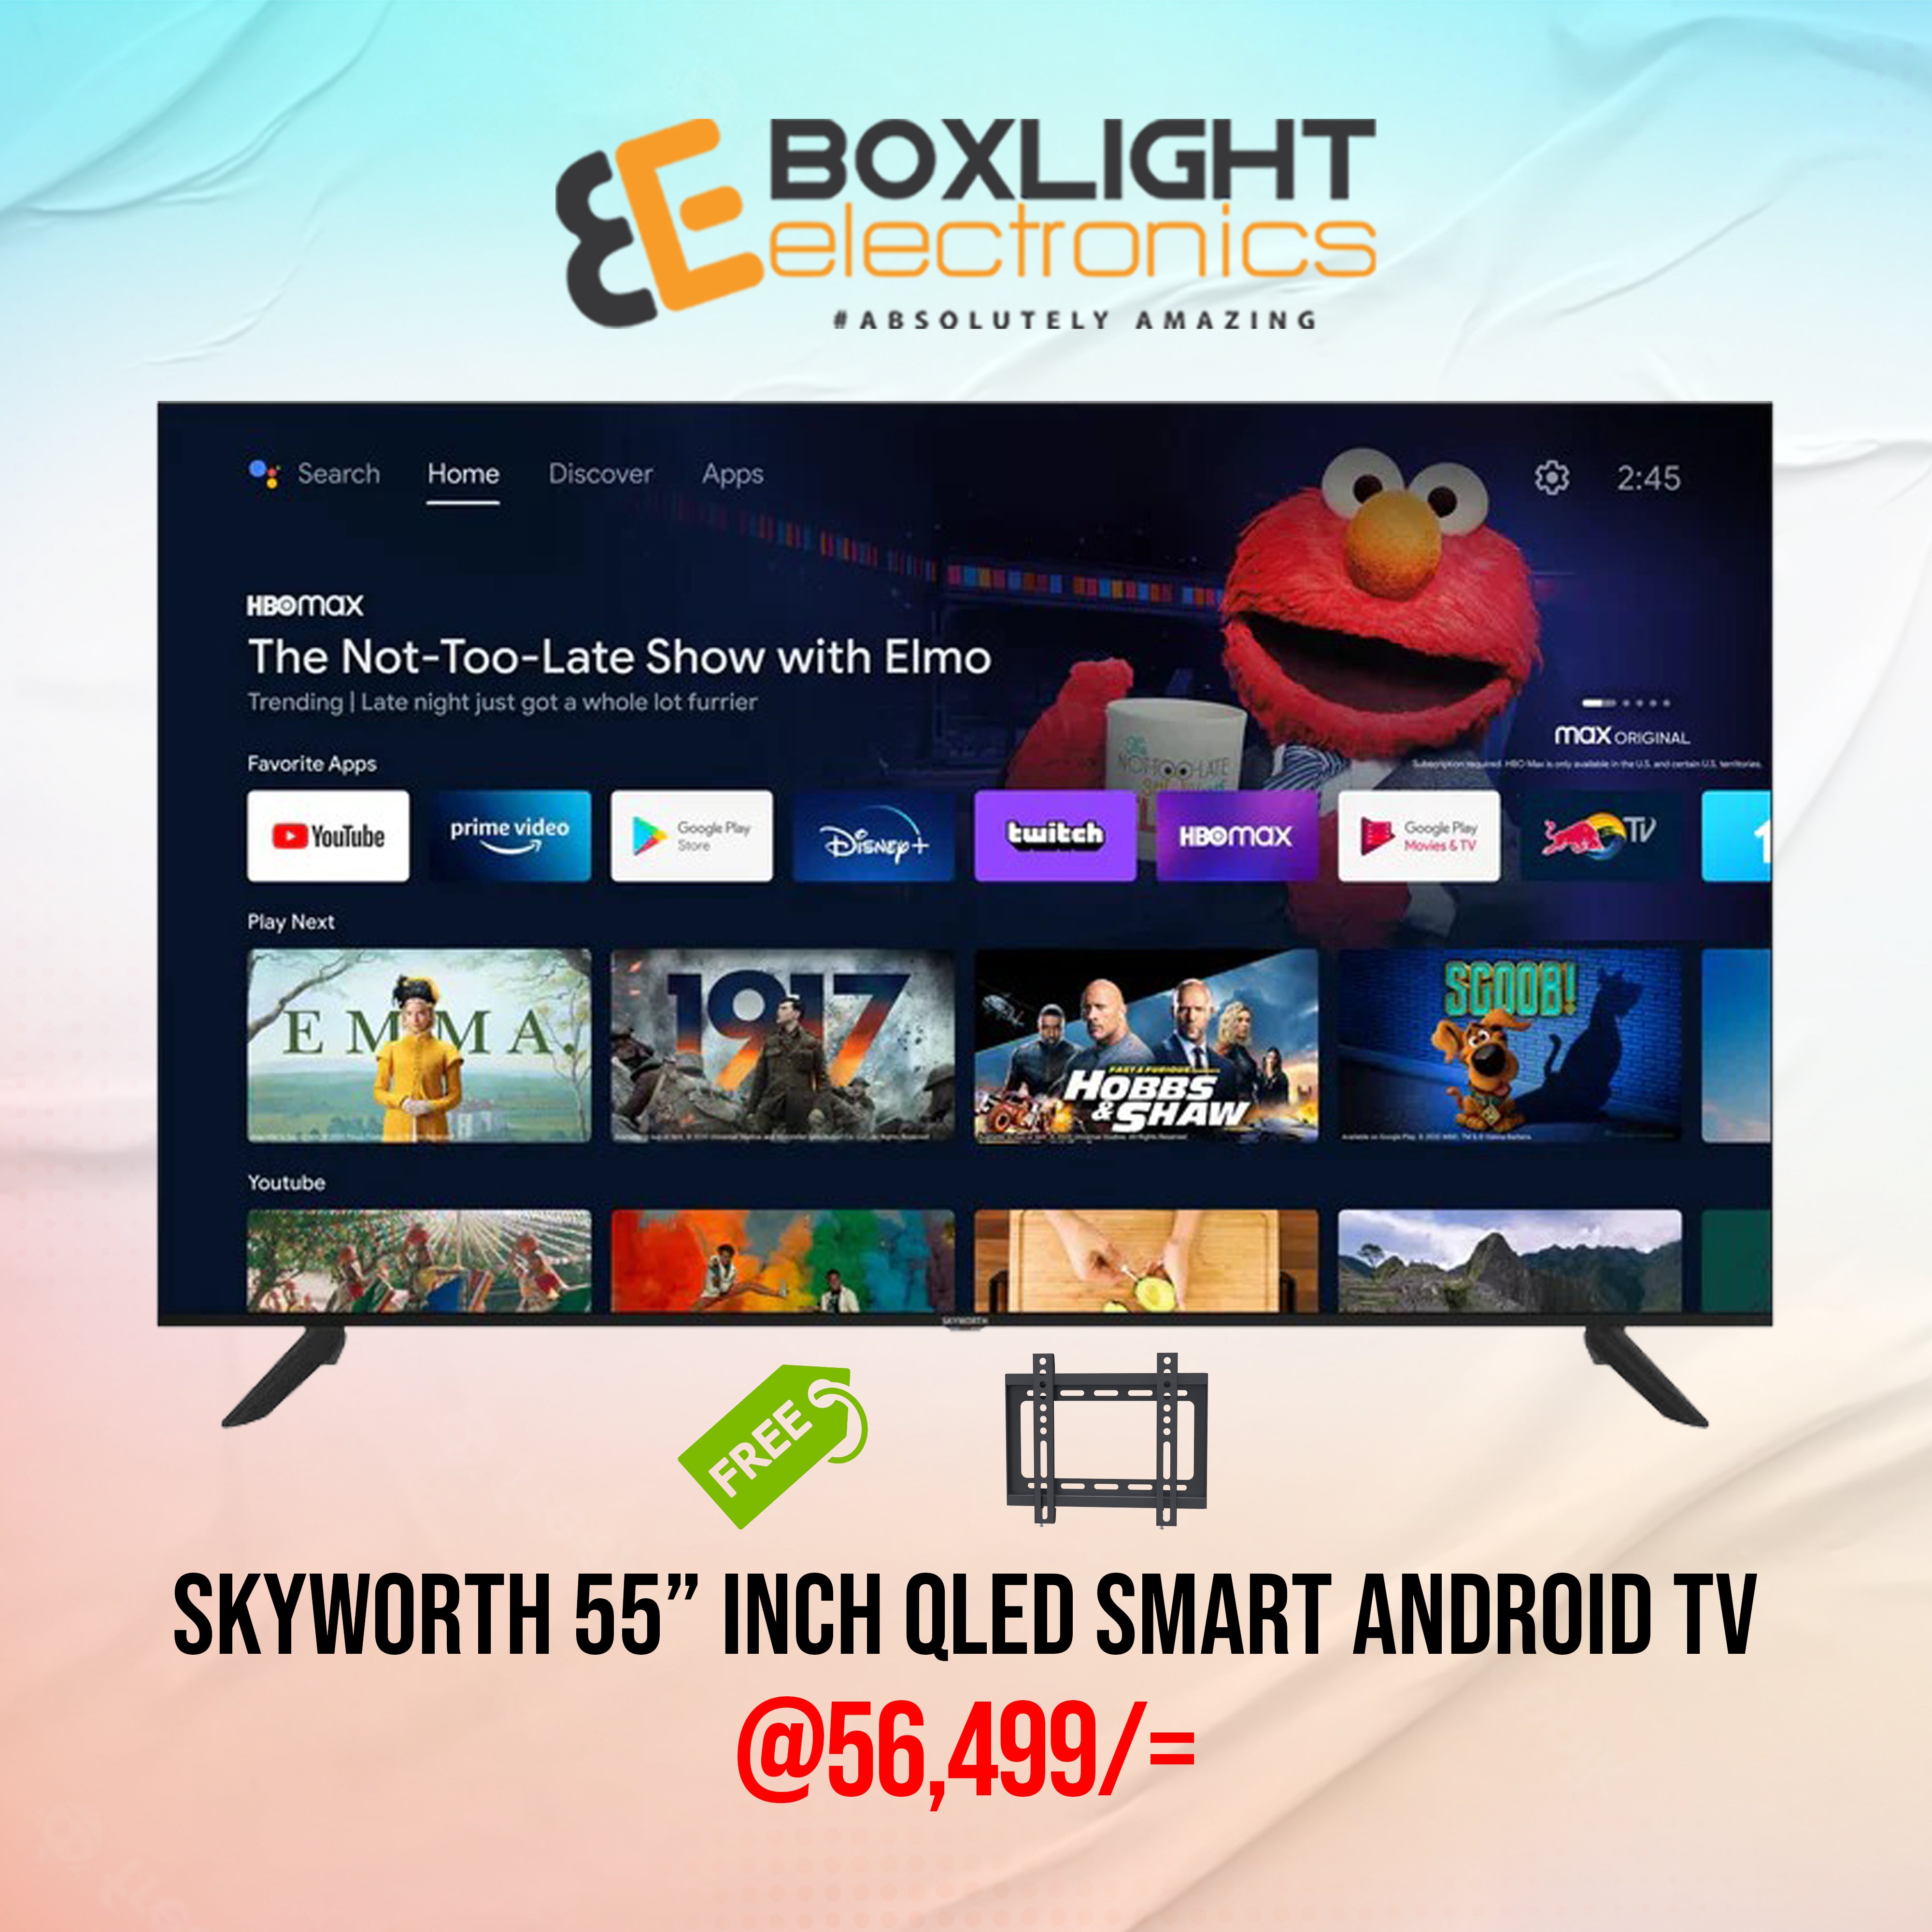 Skyworth 55" Inch UHD QLED Google Smart TV